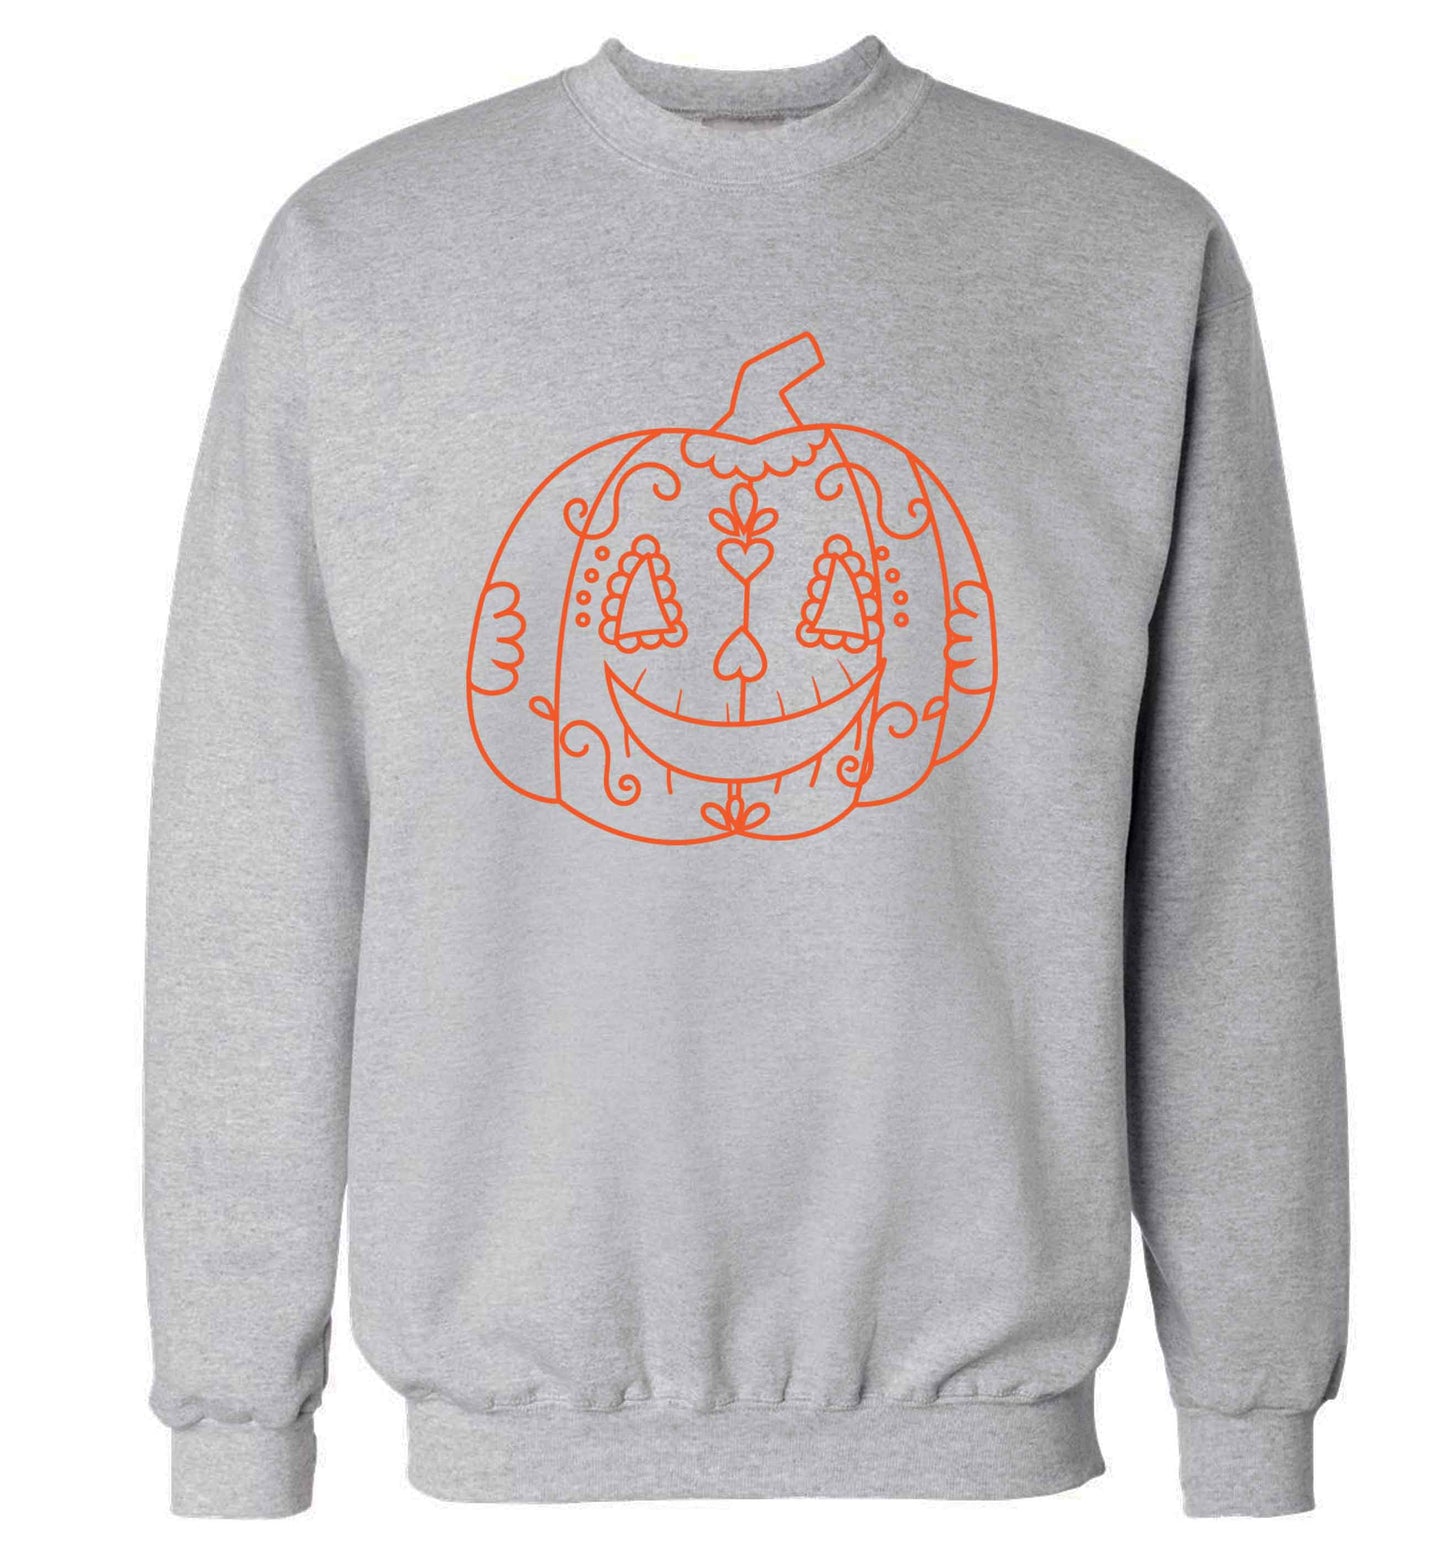 Pumpkin sugar skull adult's unisex grey sweater 2XL